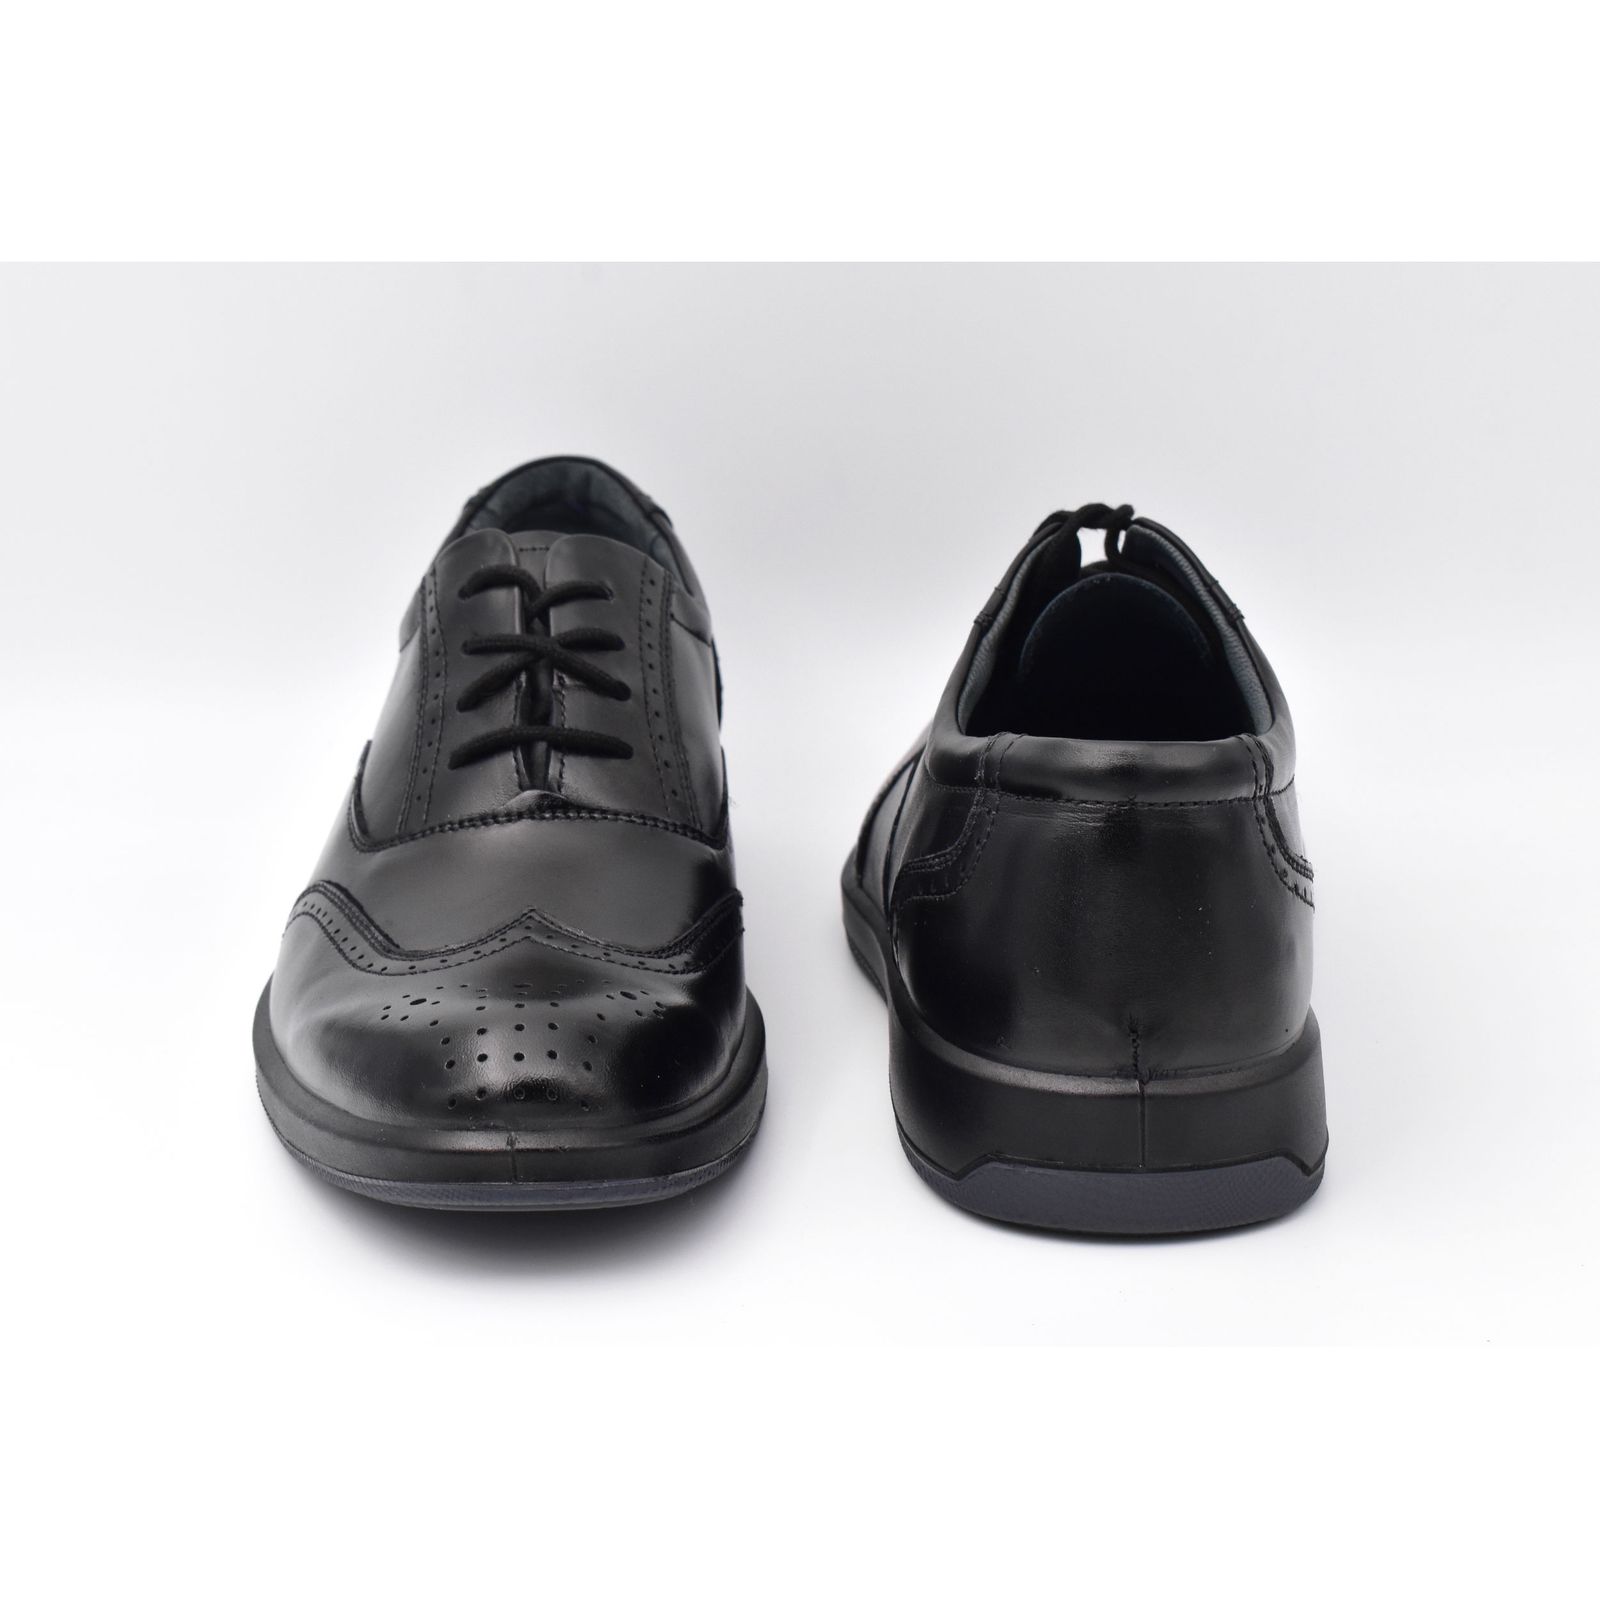 کفش روزمره مردانه پاما مدل F0 کد G1125 -  - 8